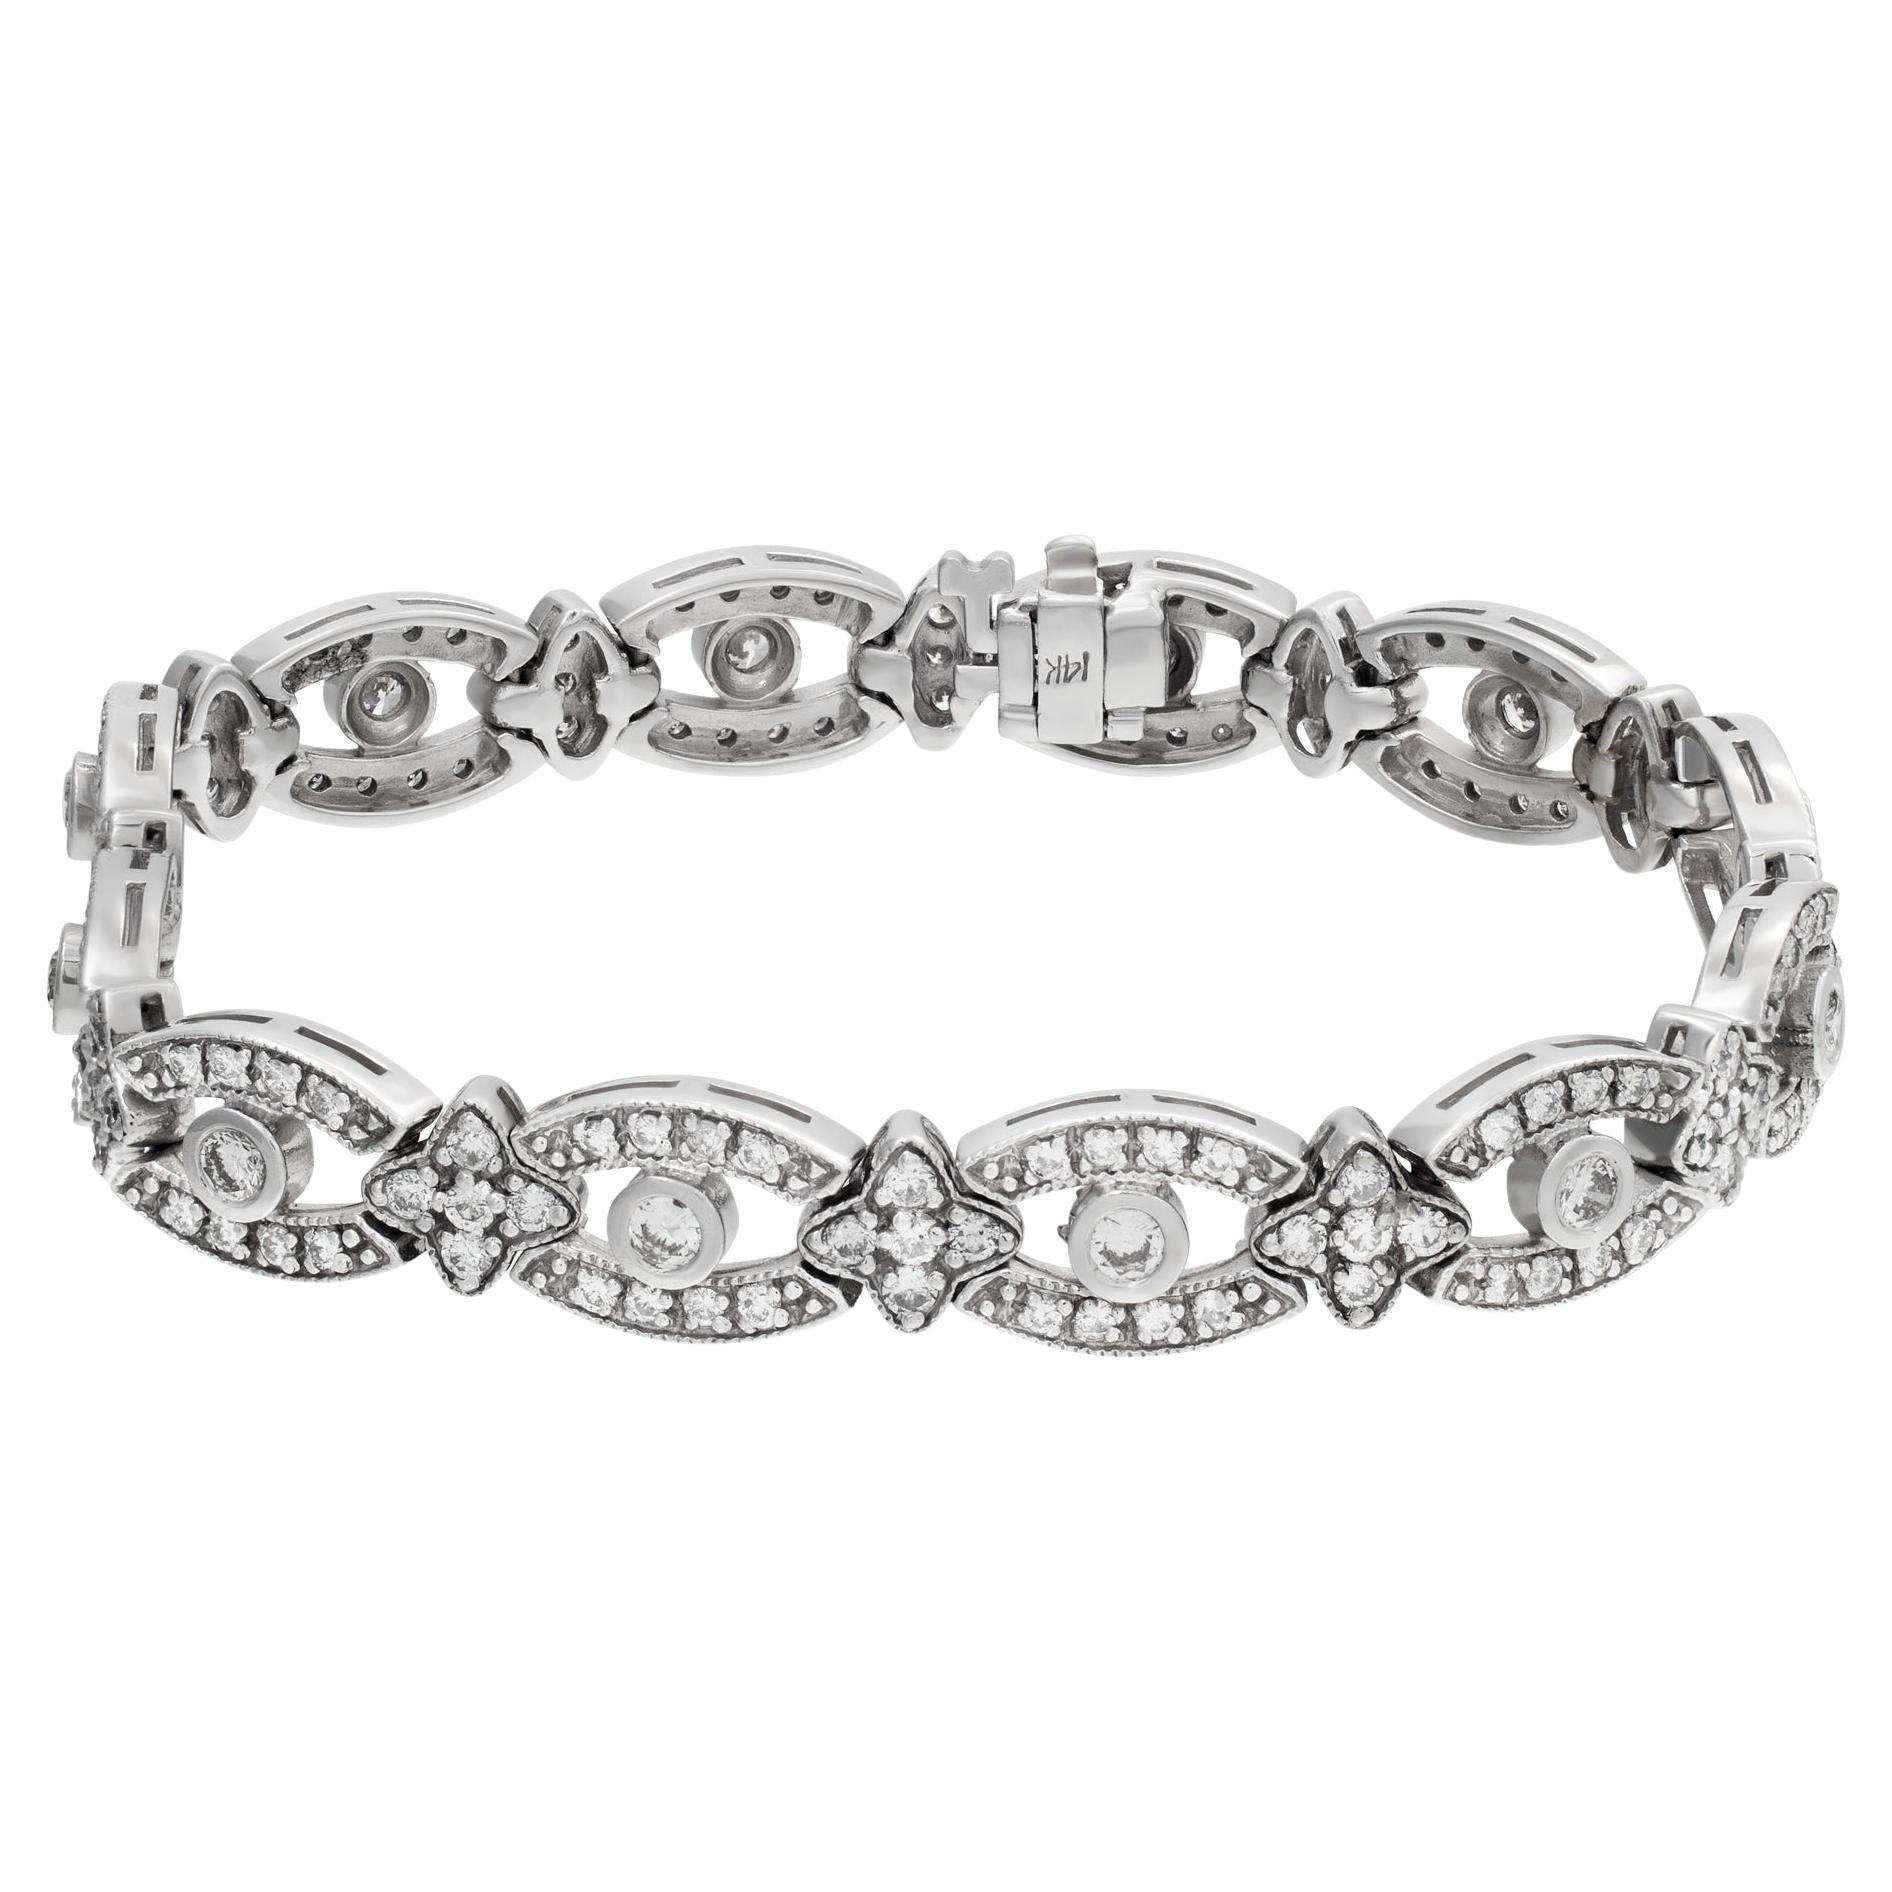 Diamonds Line Bracelet Set in 14K White Gold, Round Brilliant Cut Diamonds For Sale